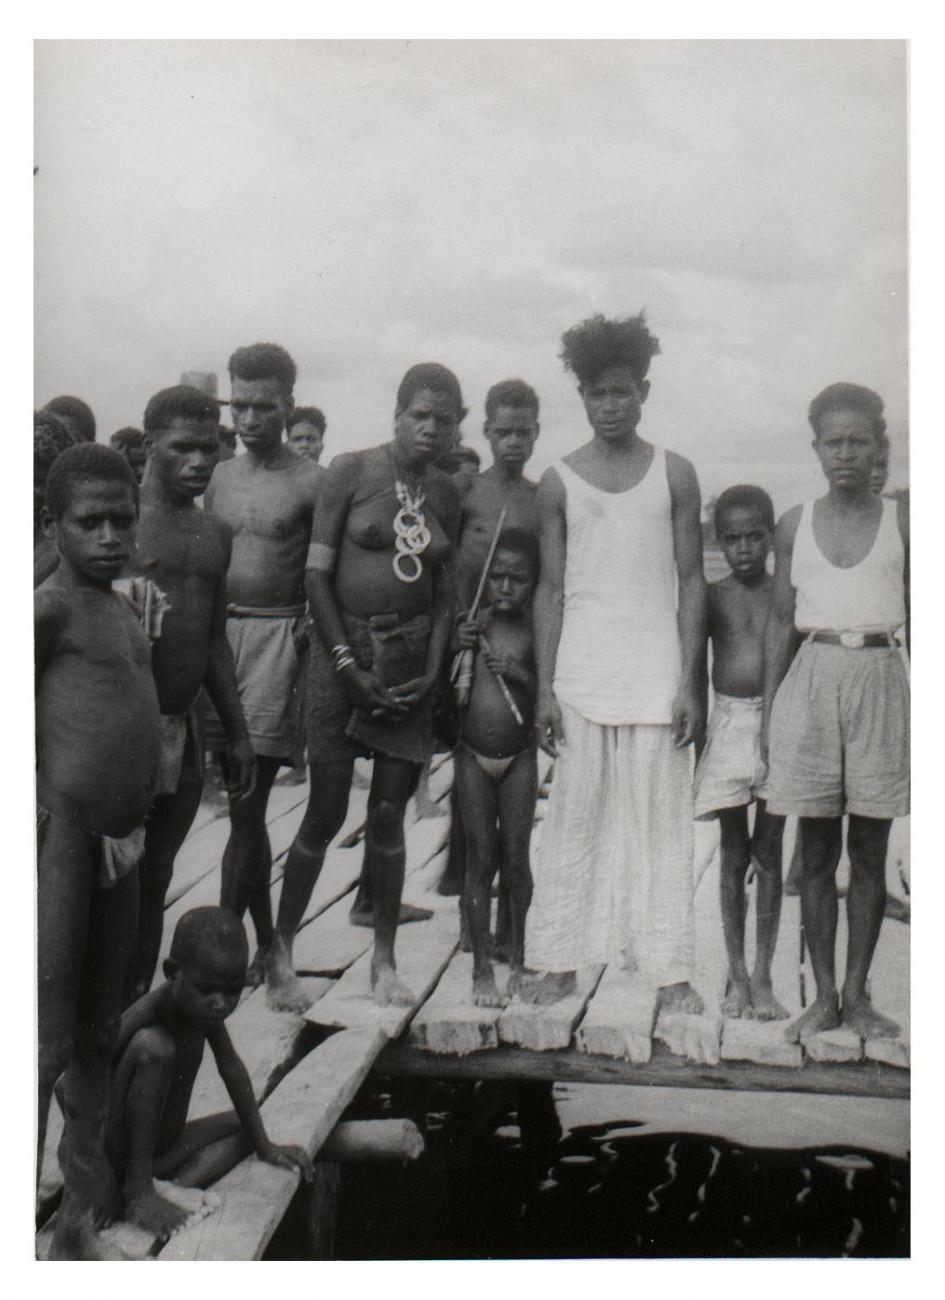 BD/54/17 - 
Aermaroe, group photo Papuans
